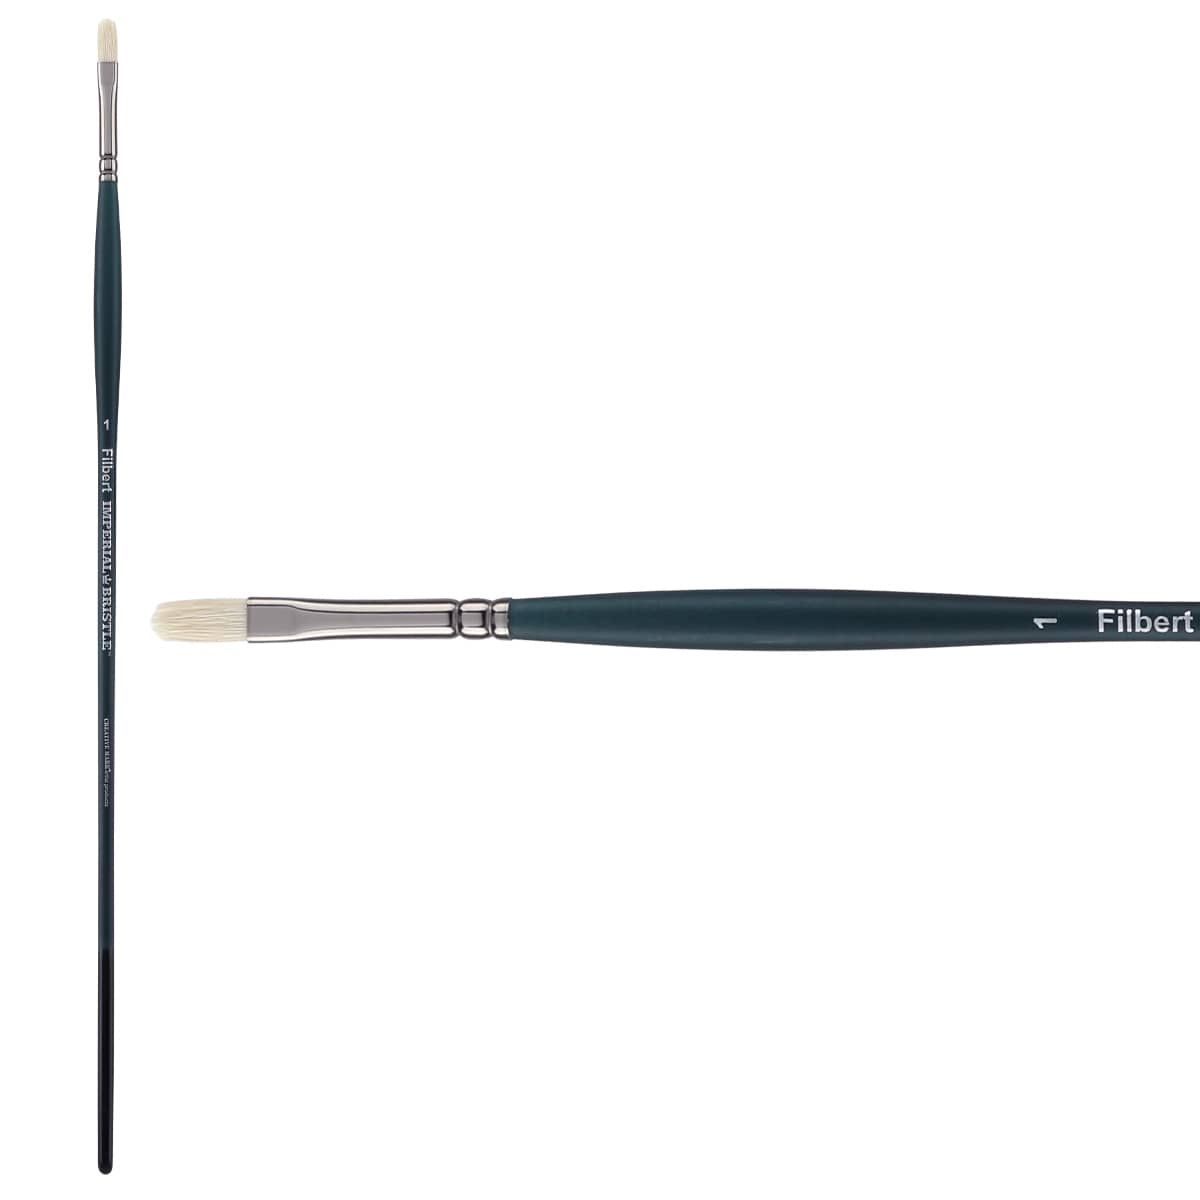 Imperial Professional Chungking Hog Bristle Brush, Filbert Size #1